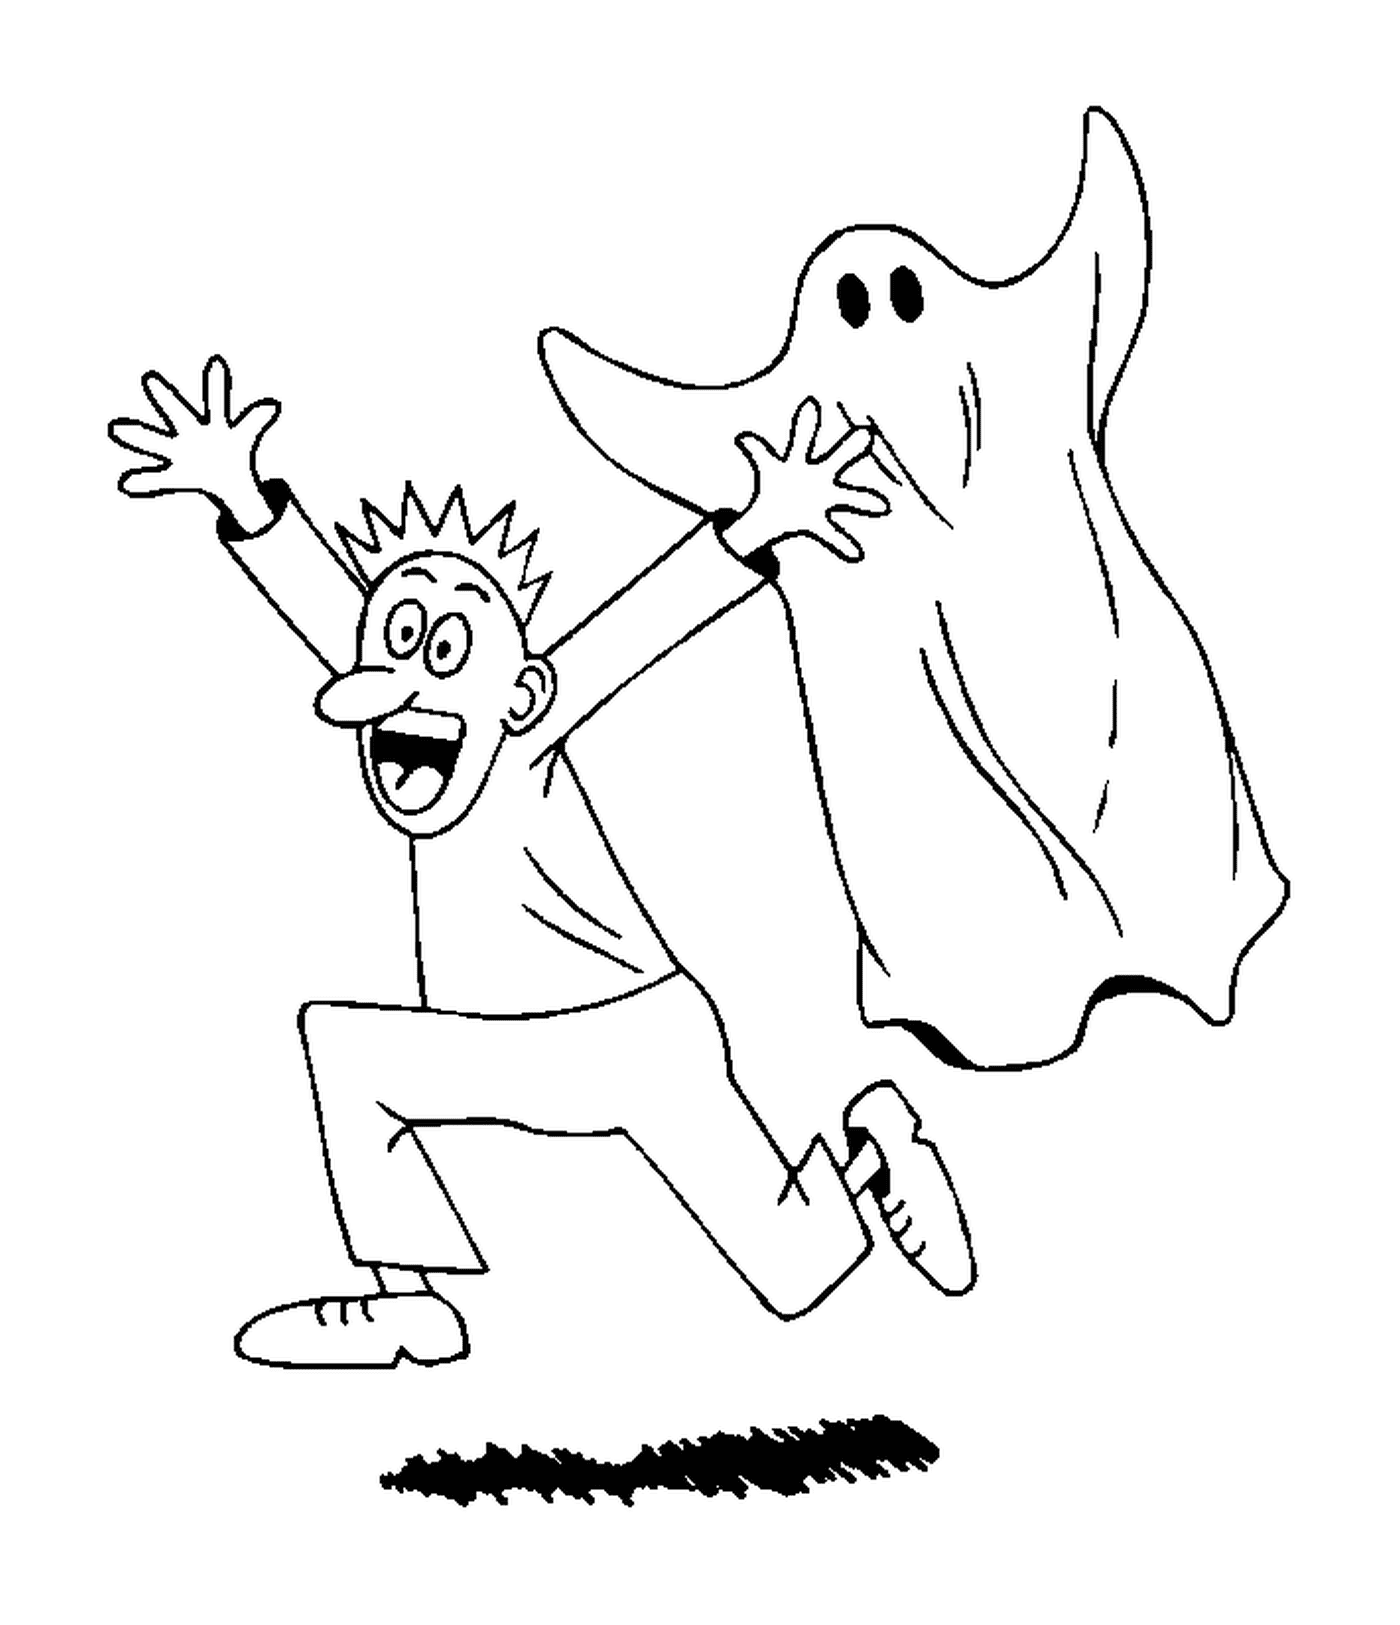  Un ser humano perseguido por un fantasma 